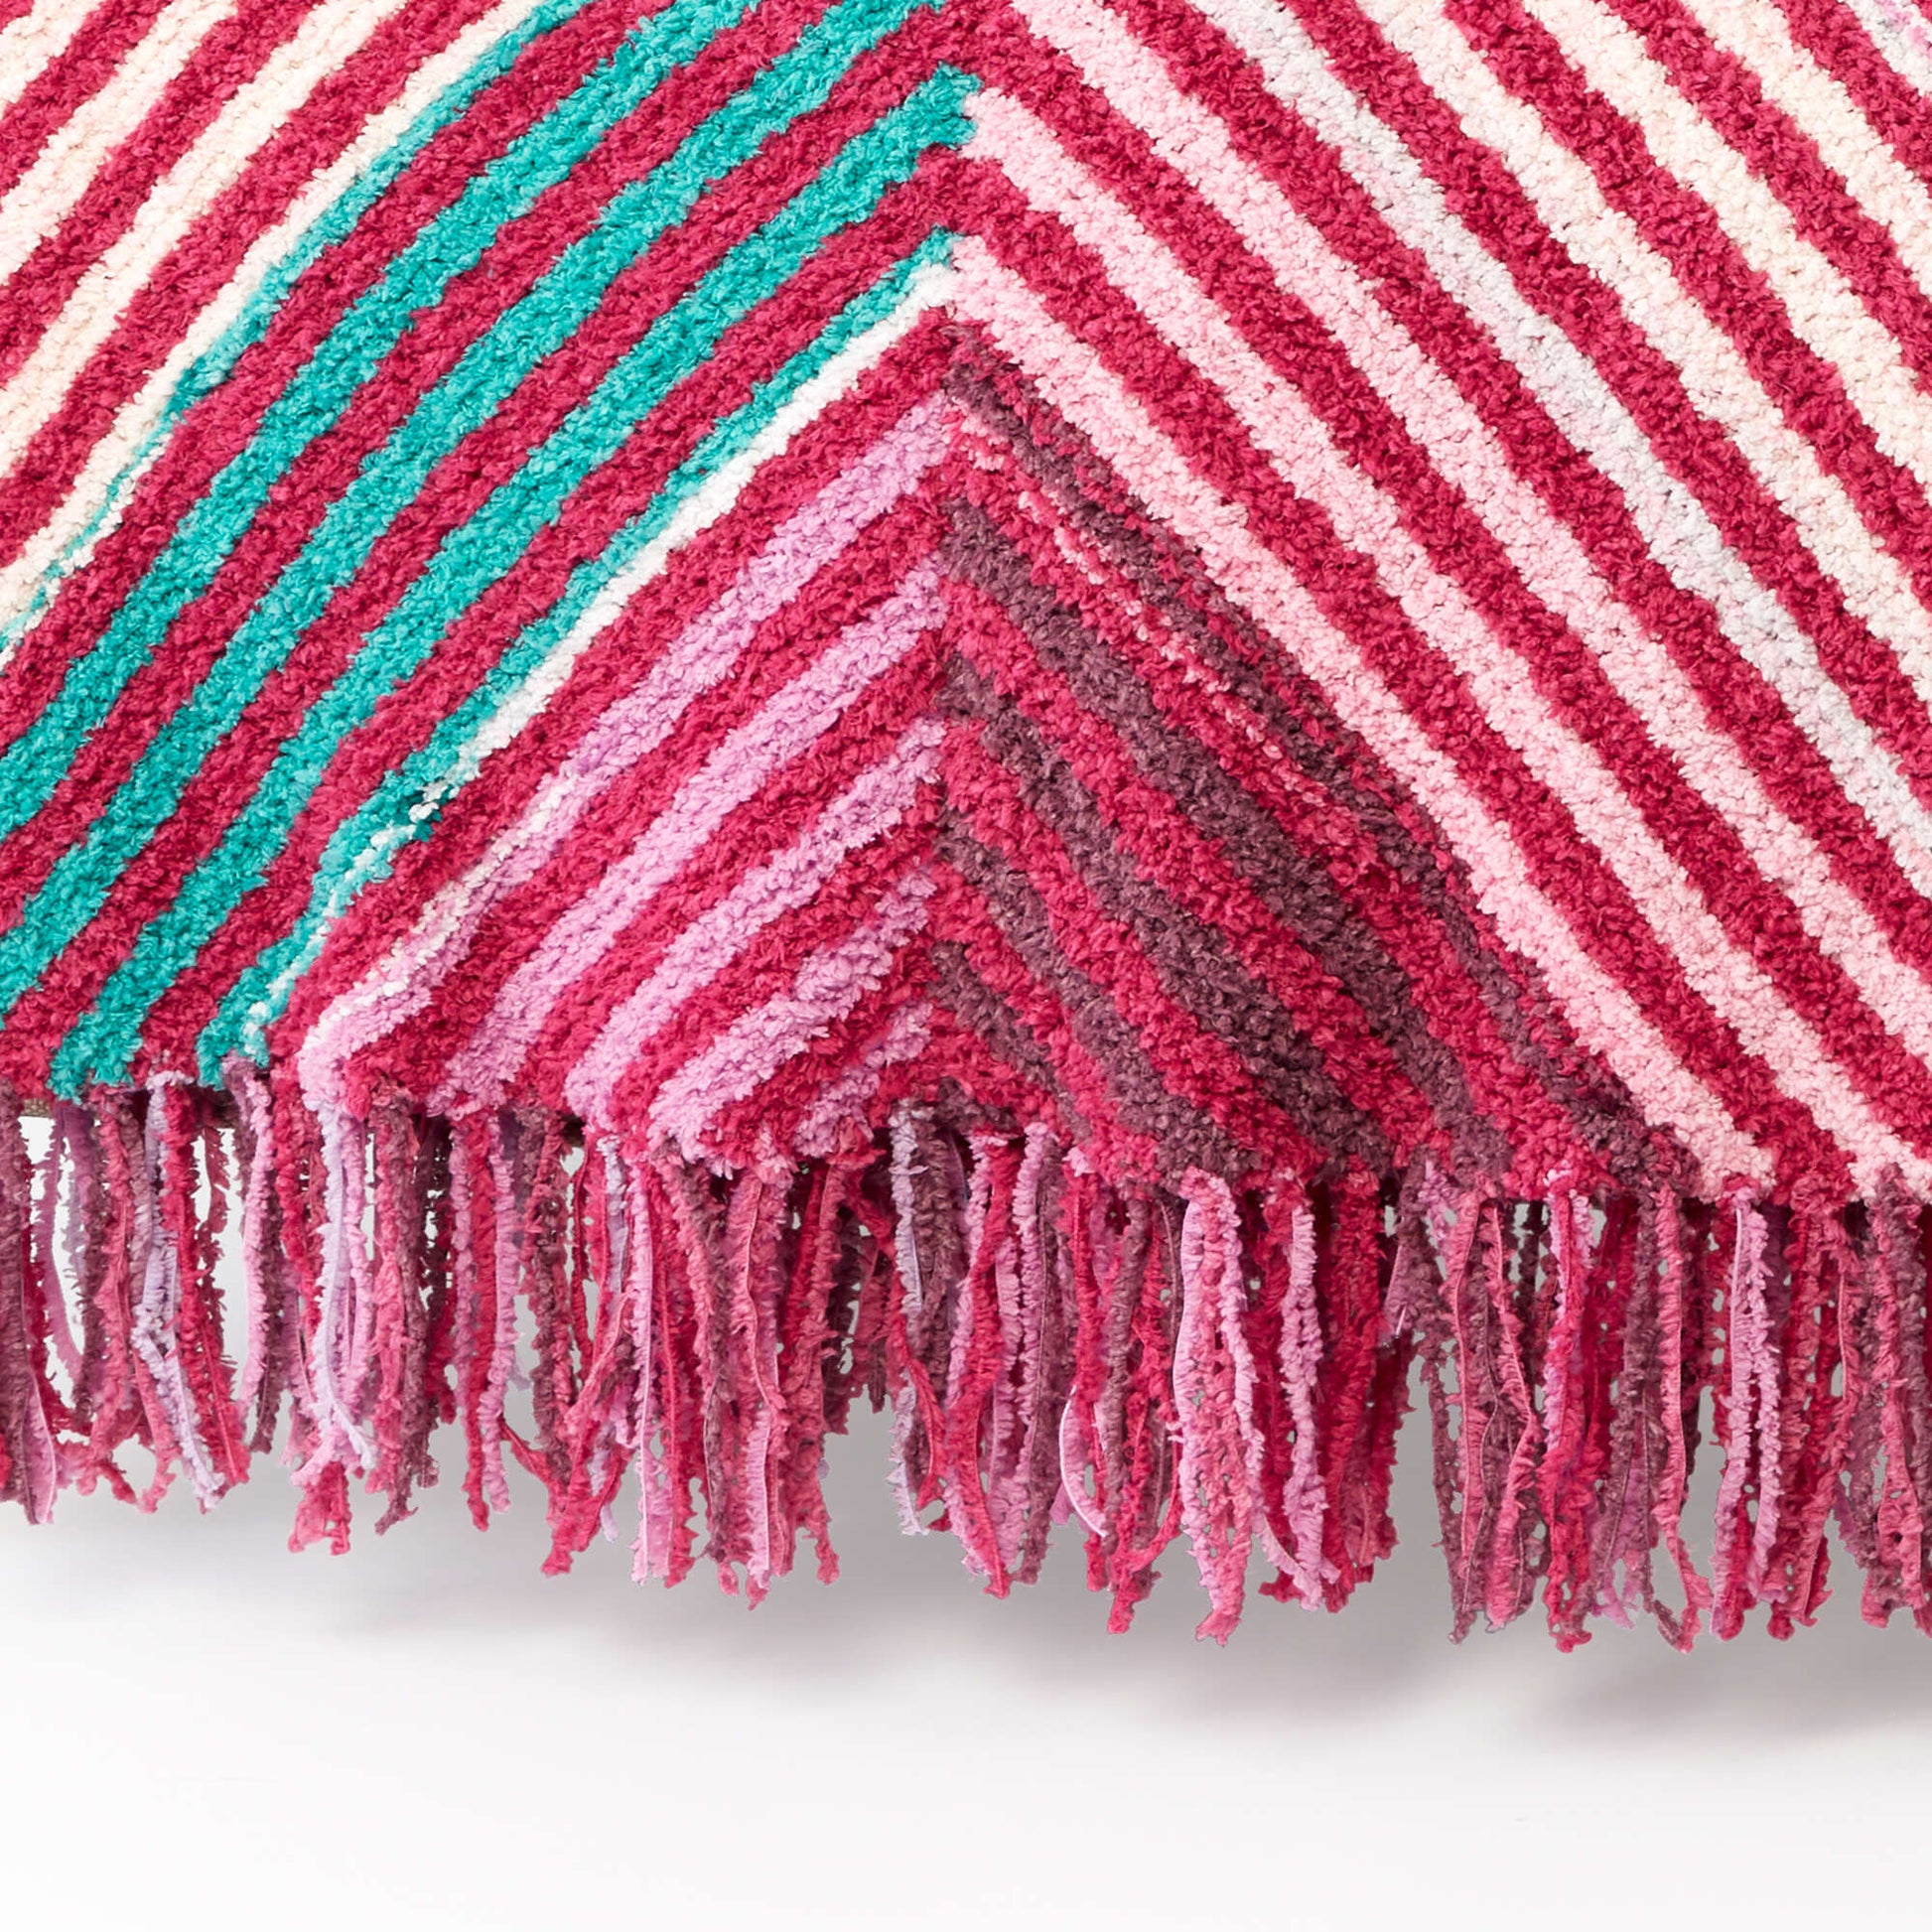 Free Bernat Book-Match Bias Knit Blanket Pattern